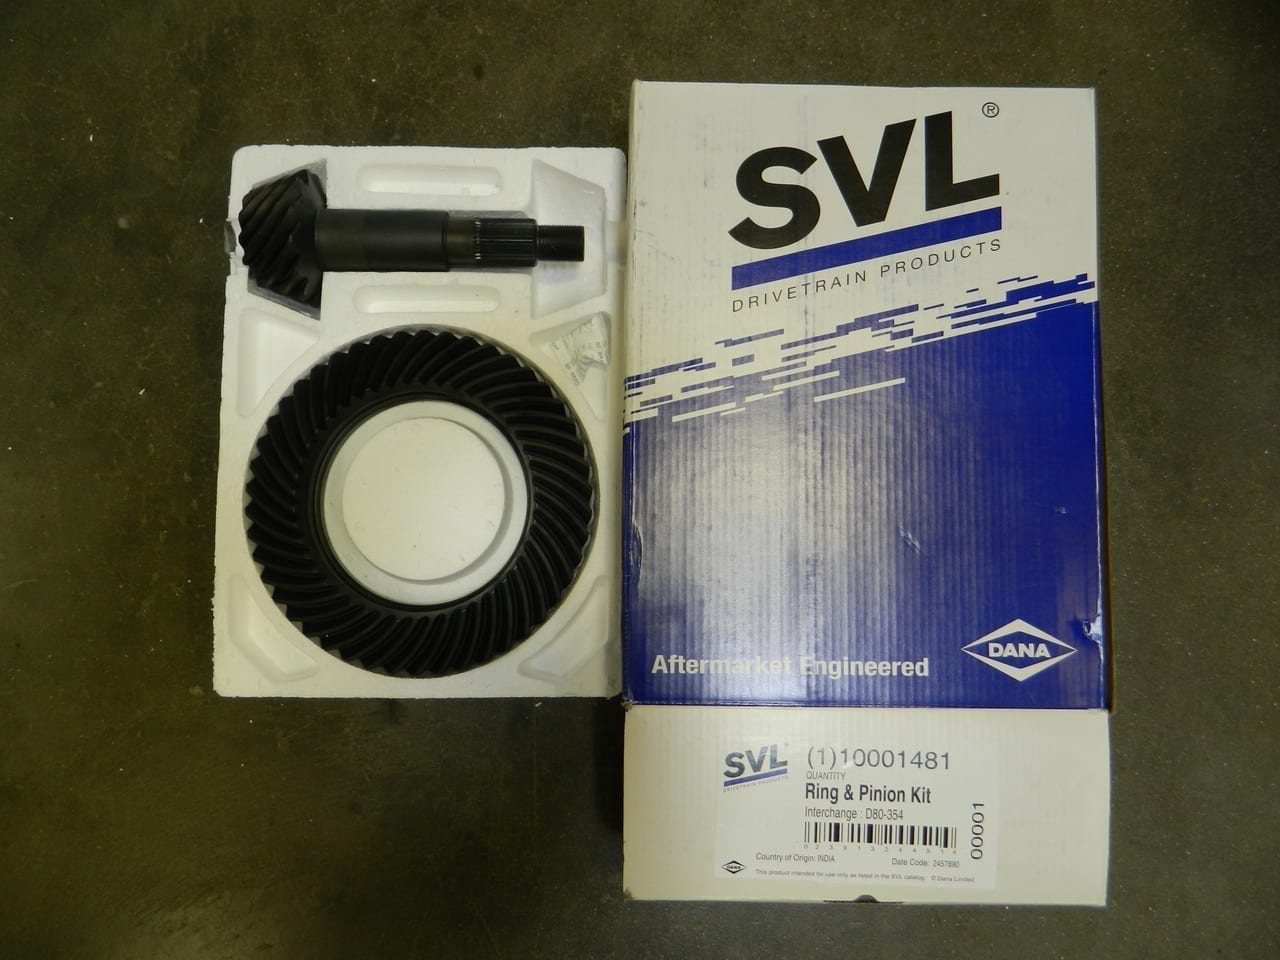 SVL Dana 80 3.54 Ratio Ring & Pinion Gear Set Dodge Ford 354